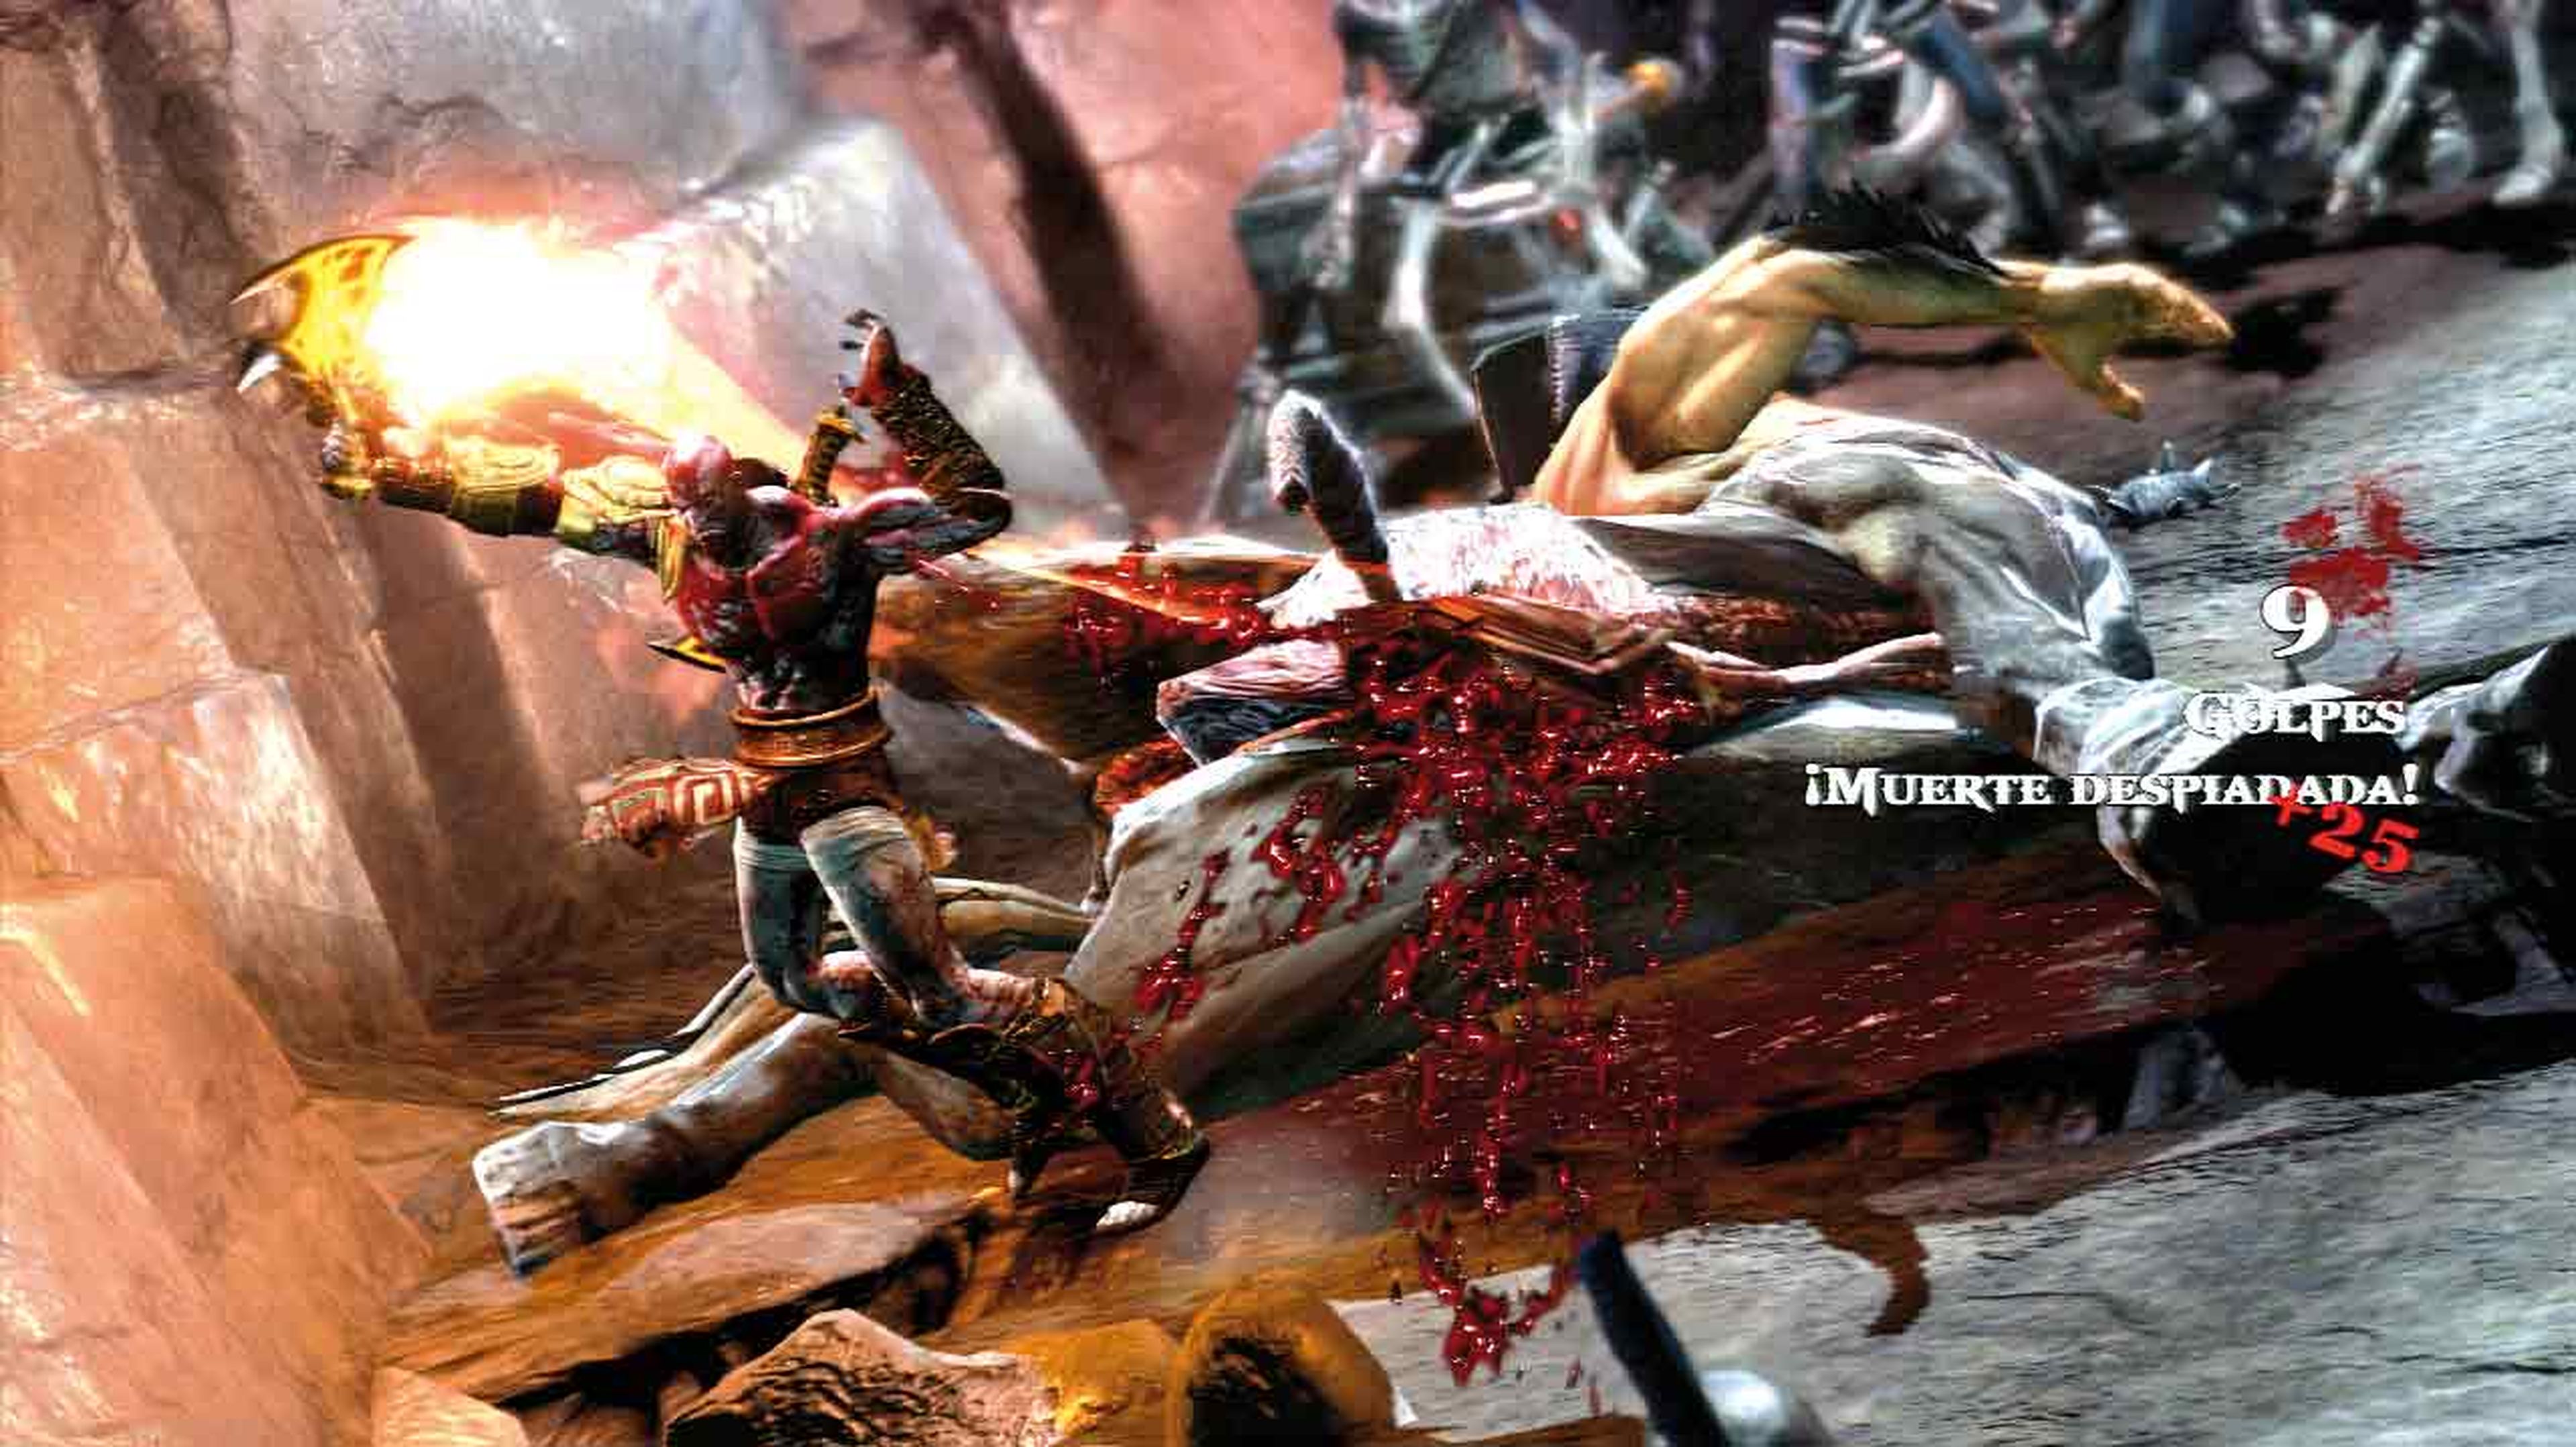 La review más salvaje de God of War III